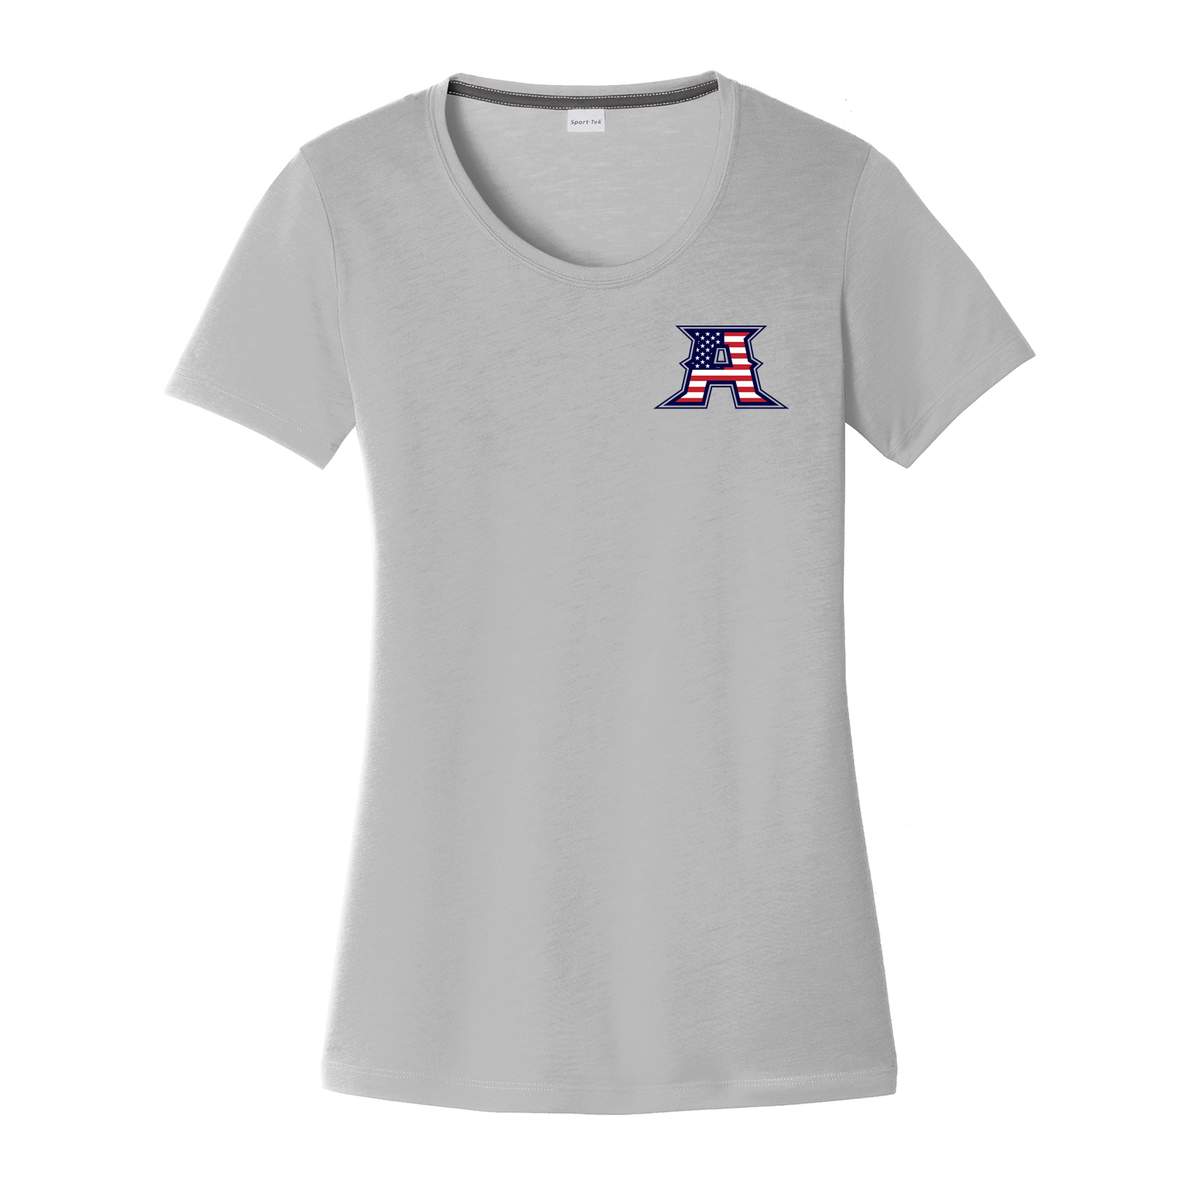 All American Baseball Women's CottonTouch Performance T-Shirt